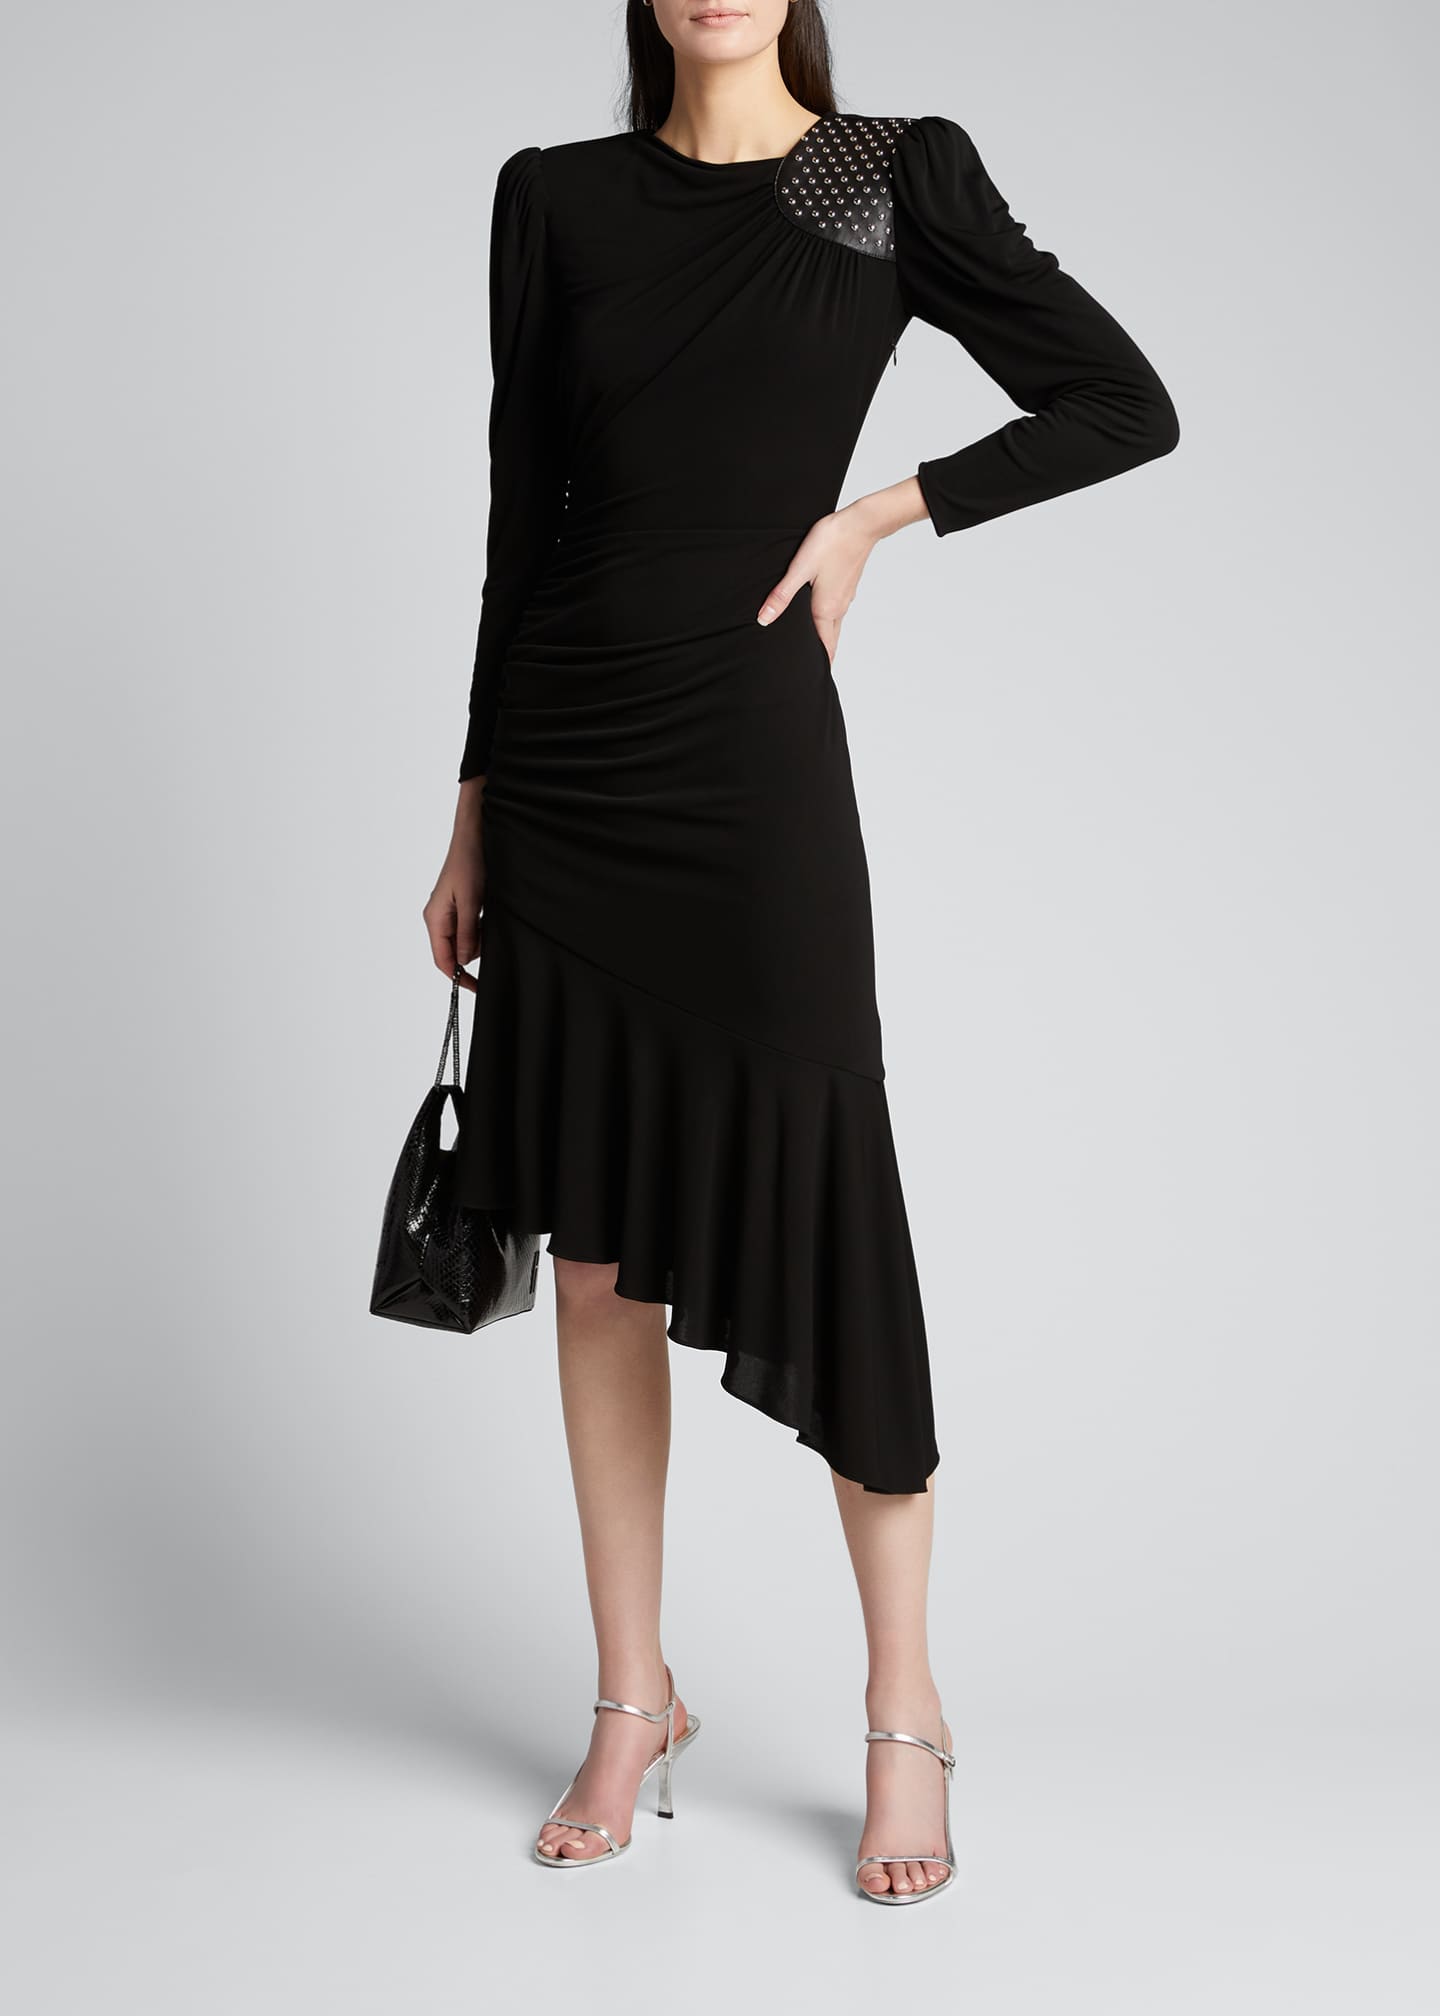 Thierry Mugler Original Grommet-Studded Leather Dress, Black